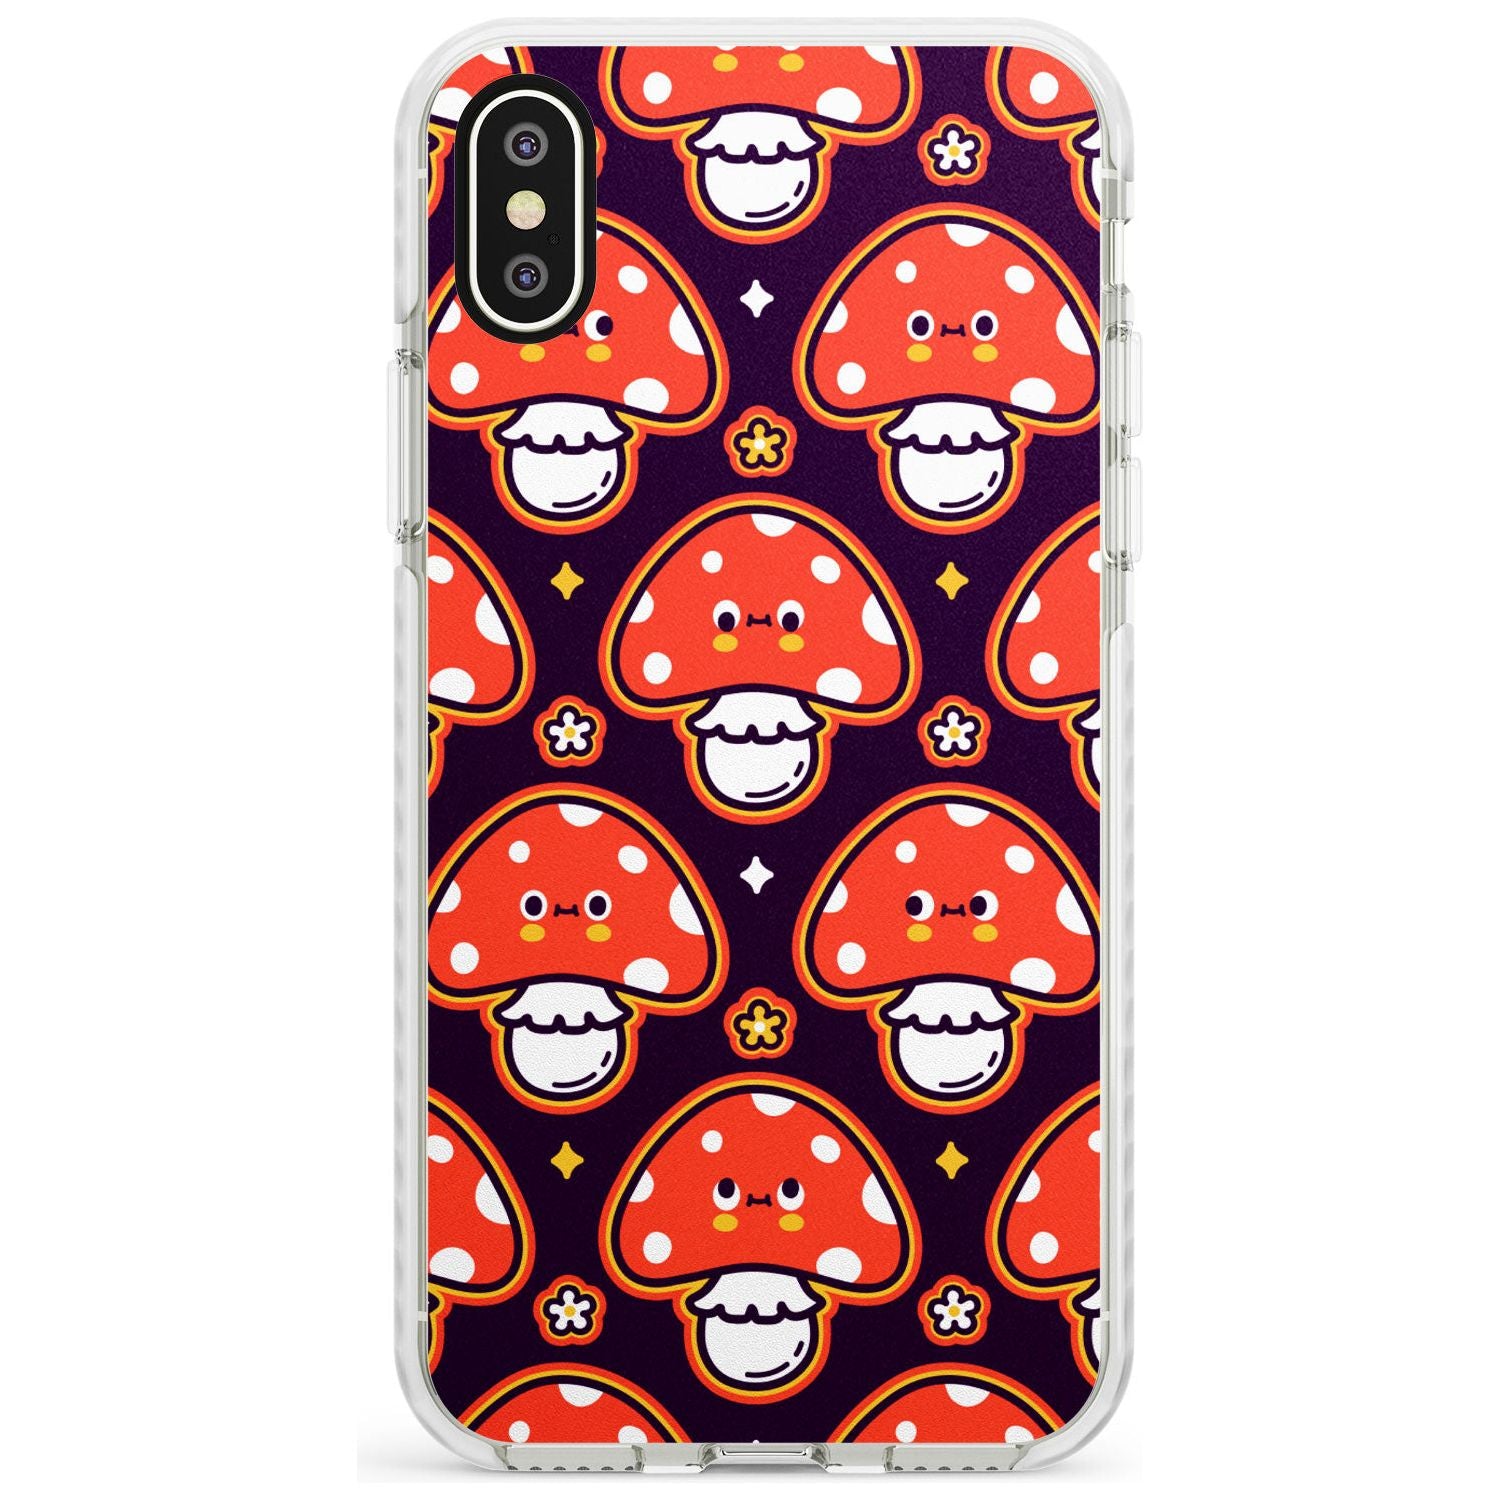 Mushroom Kawaii Pattern Impact Phone Case for iPhone X XS Max XR